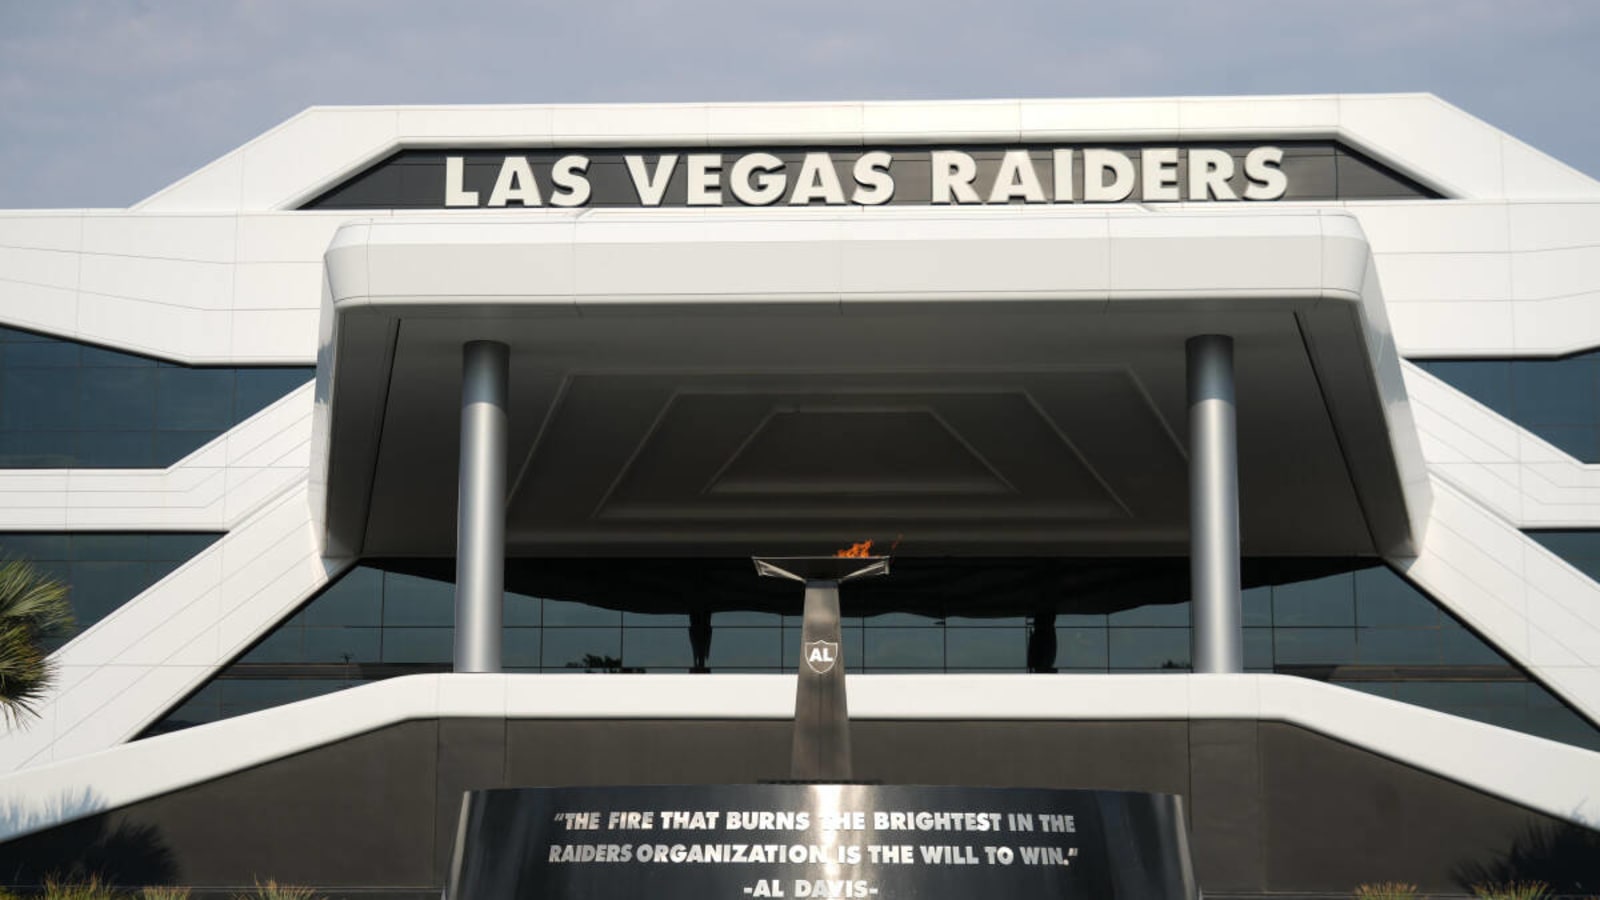 Las Vegas Raiders PR staff gets nominated for prestigious award